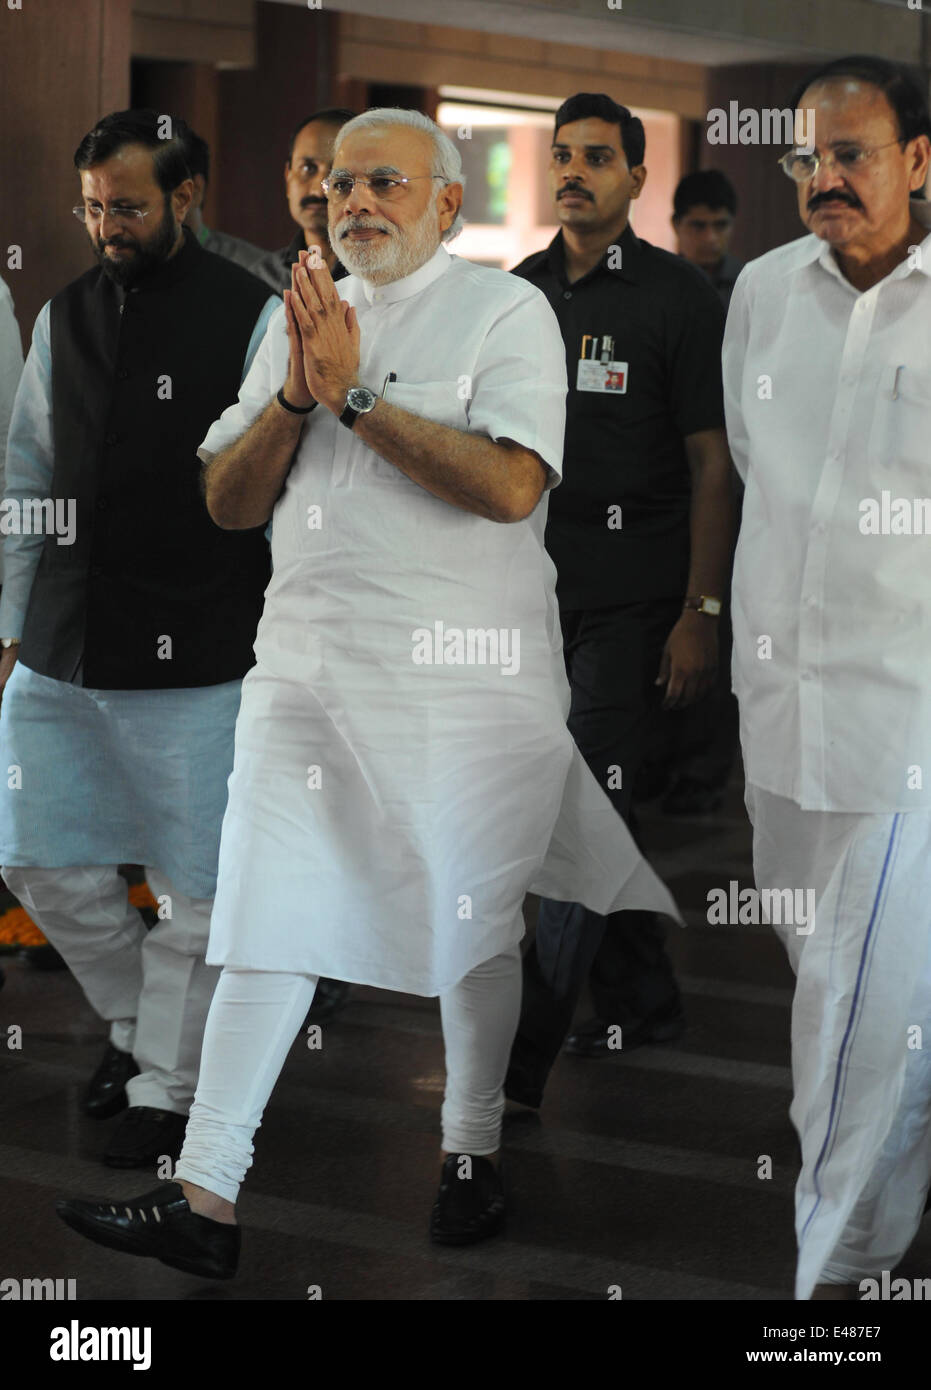 (140705)--NEU-DELHI, 5. Juli 2014 (Xinhua)--Indian Prime Minister Narendra Modi (C) kommt bei der alle Party treffen im Parlament Haus Dependance in New Delhi, Indien, 5. Juli 2014. (Xinhua/Partha Sarkar) (Zjy) Stockfoto